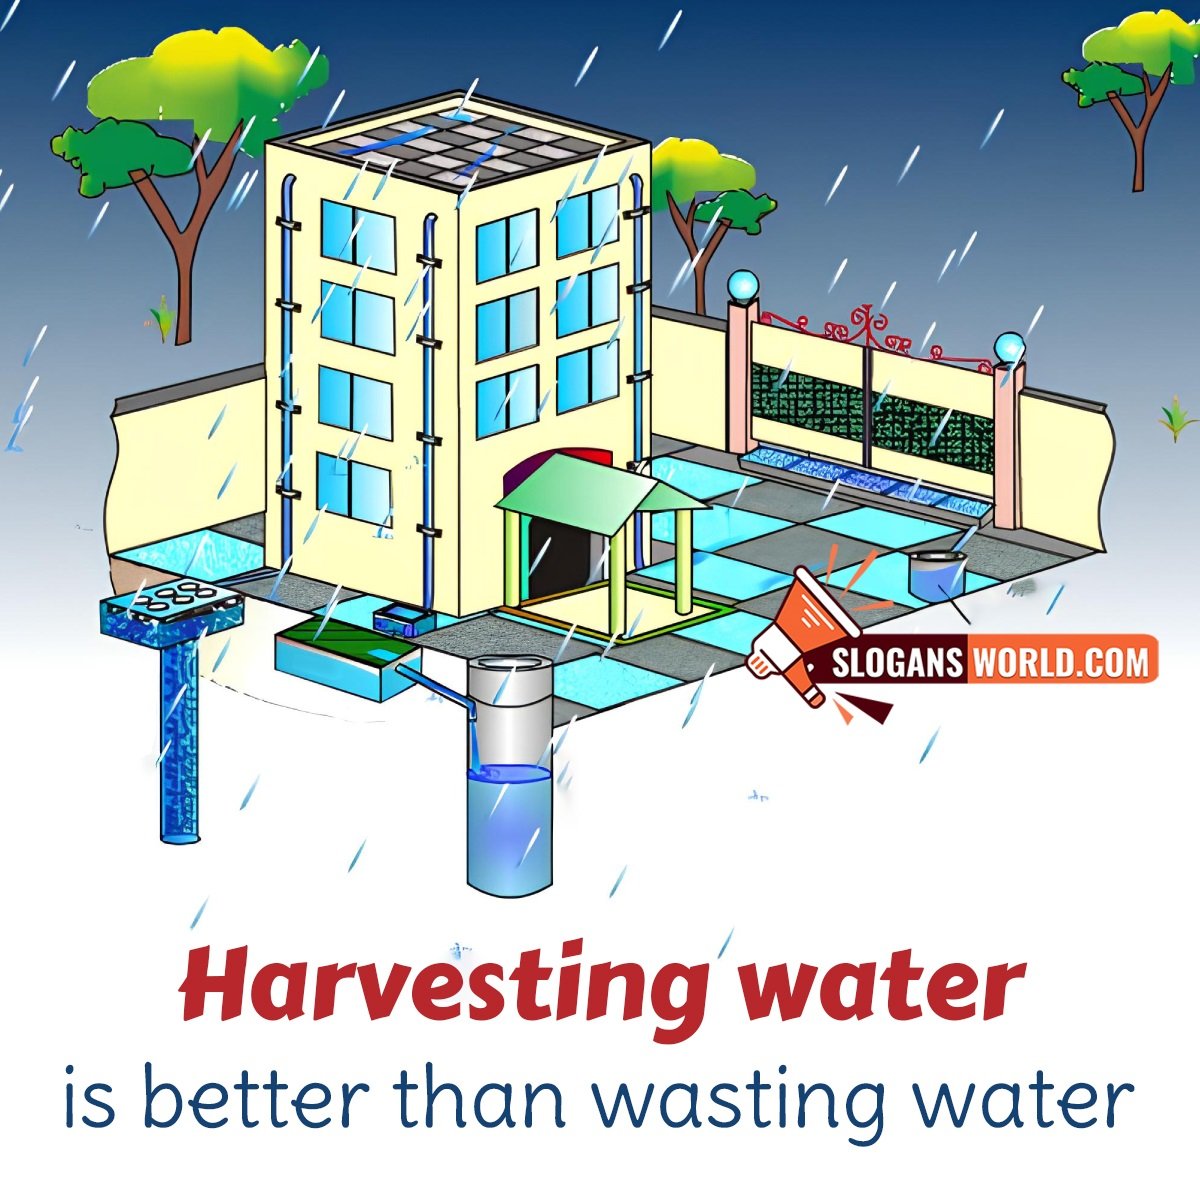 Slogan On Harvesting Water